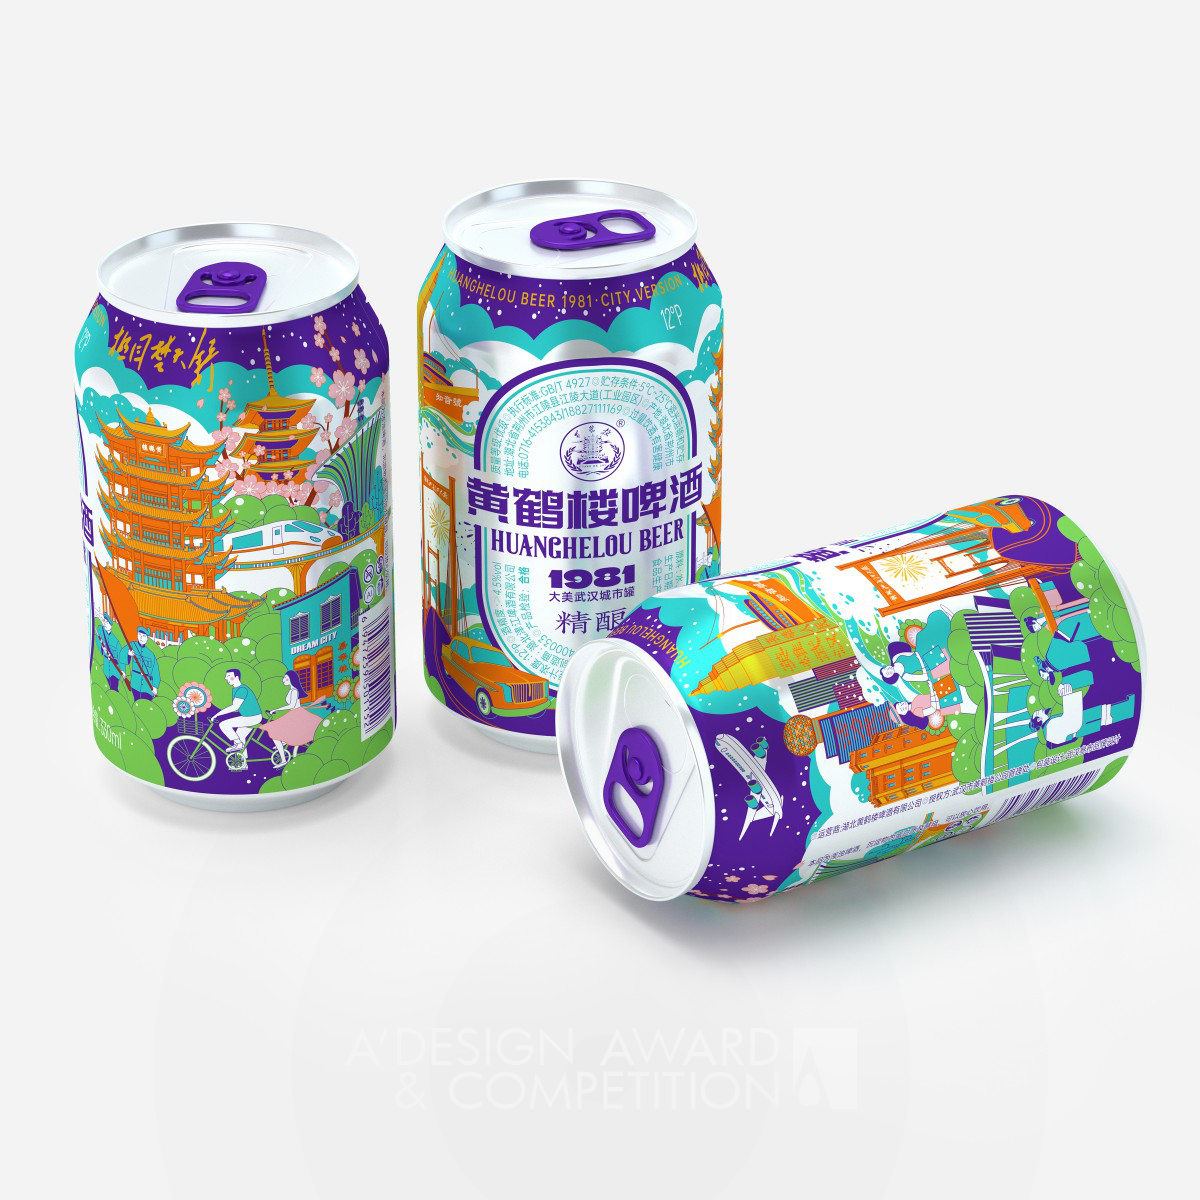 Huanghelou Beer Packaging by Jin Zhang